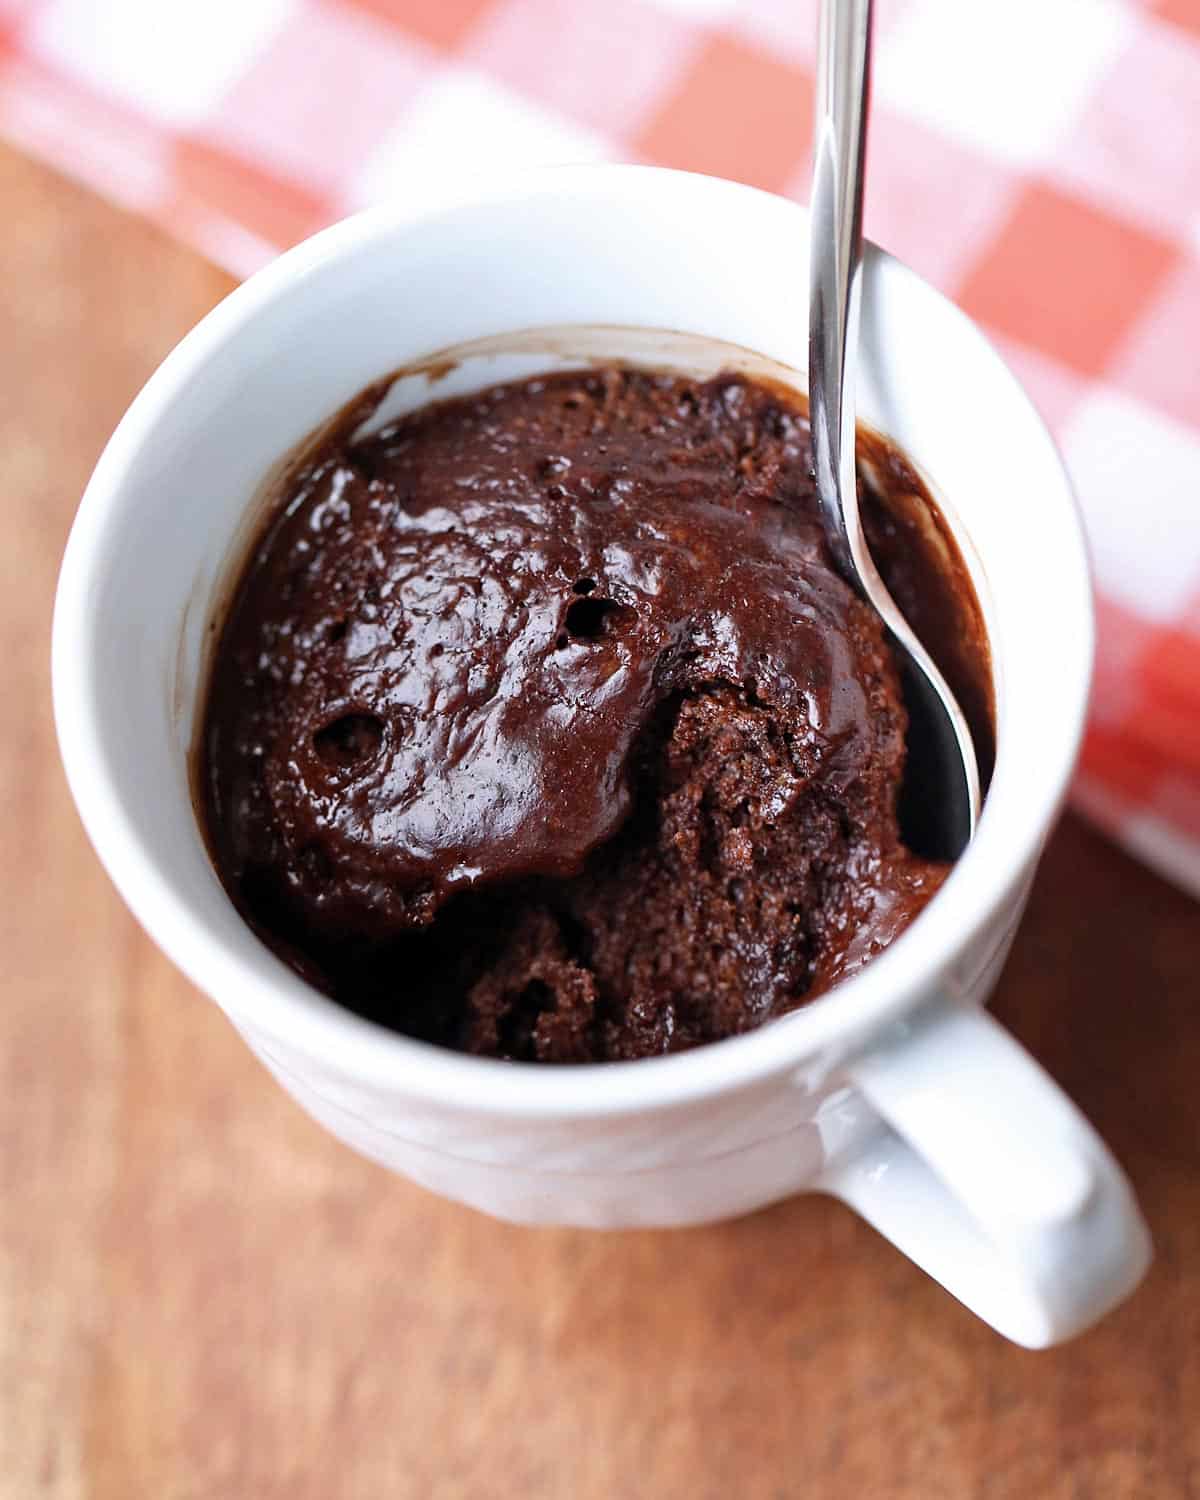 Keto chocolate mug cake served in a white mug with a spoon.